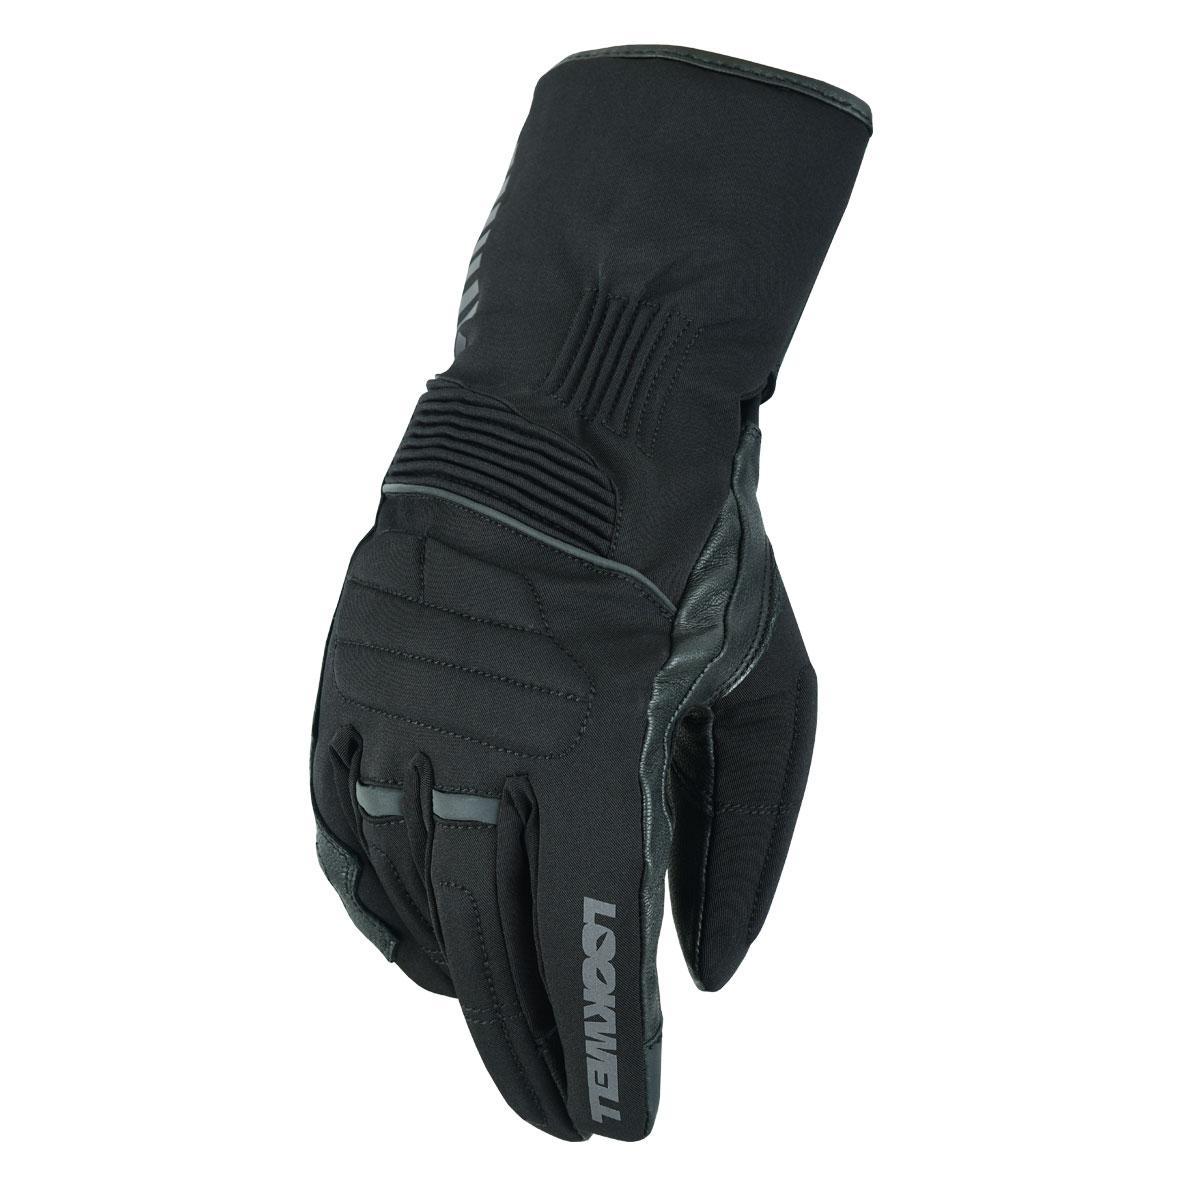 Wg 1 Glove Blk Back Relaxed trike-webshop